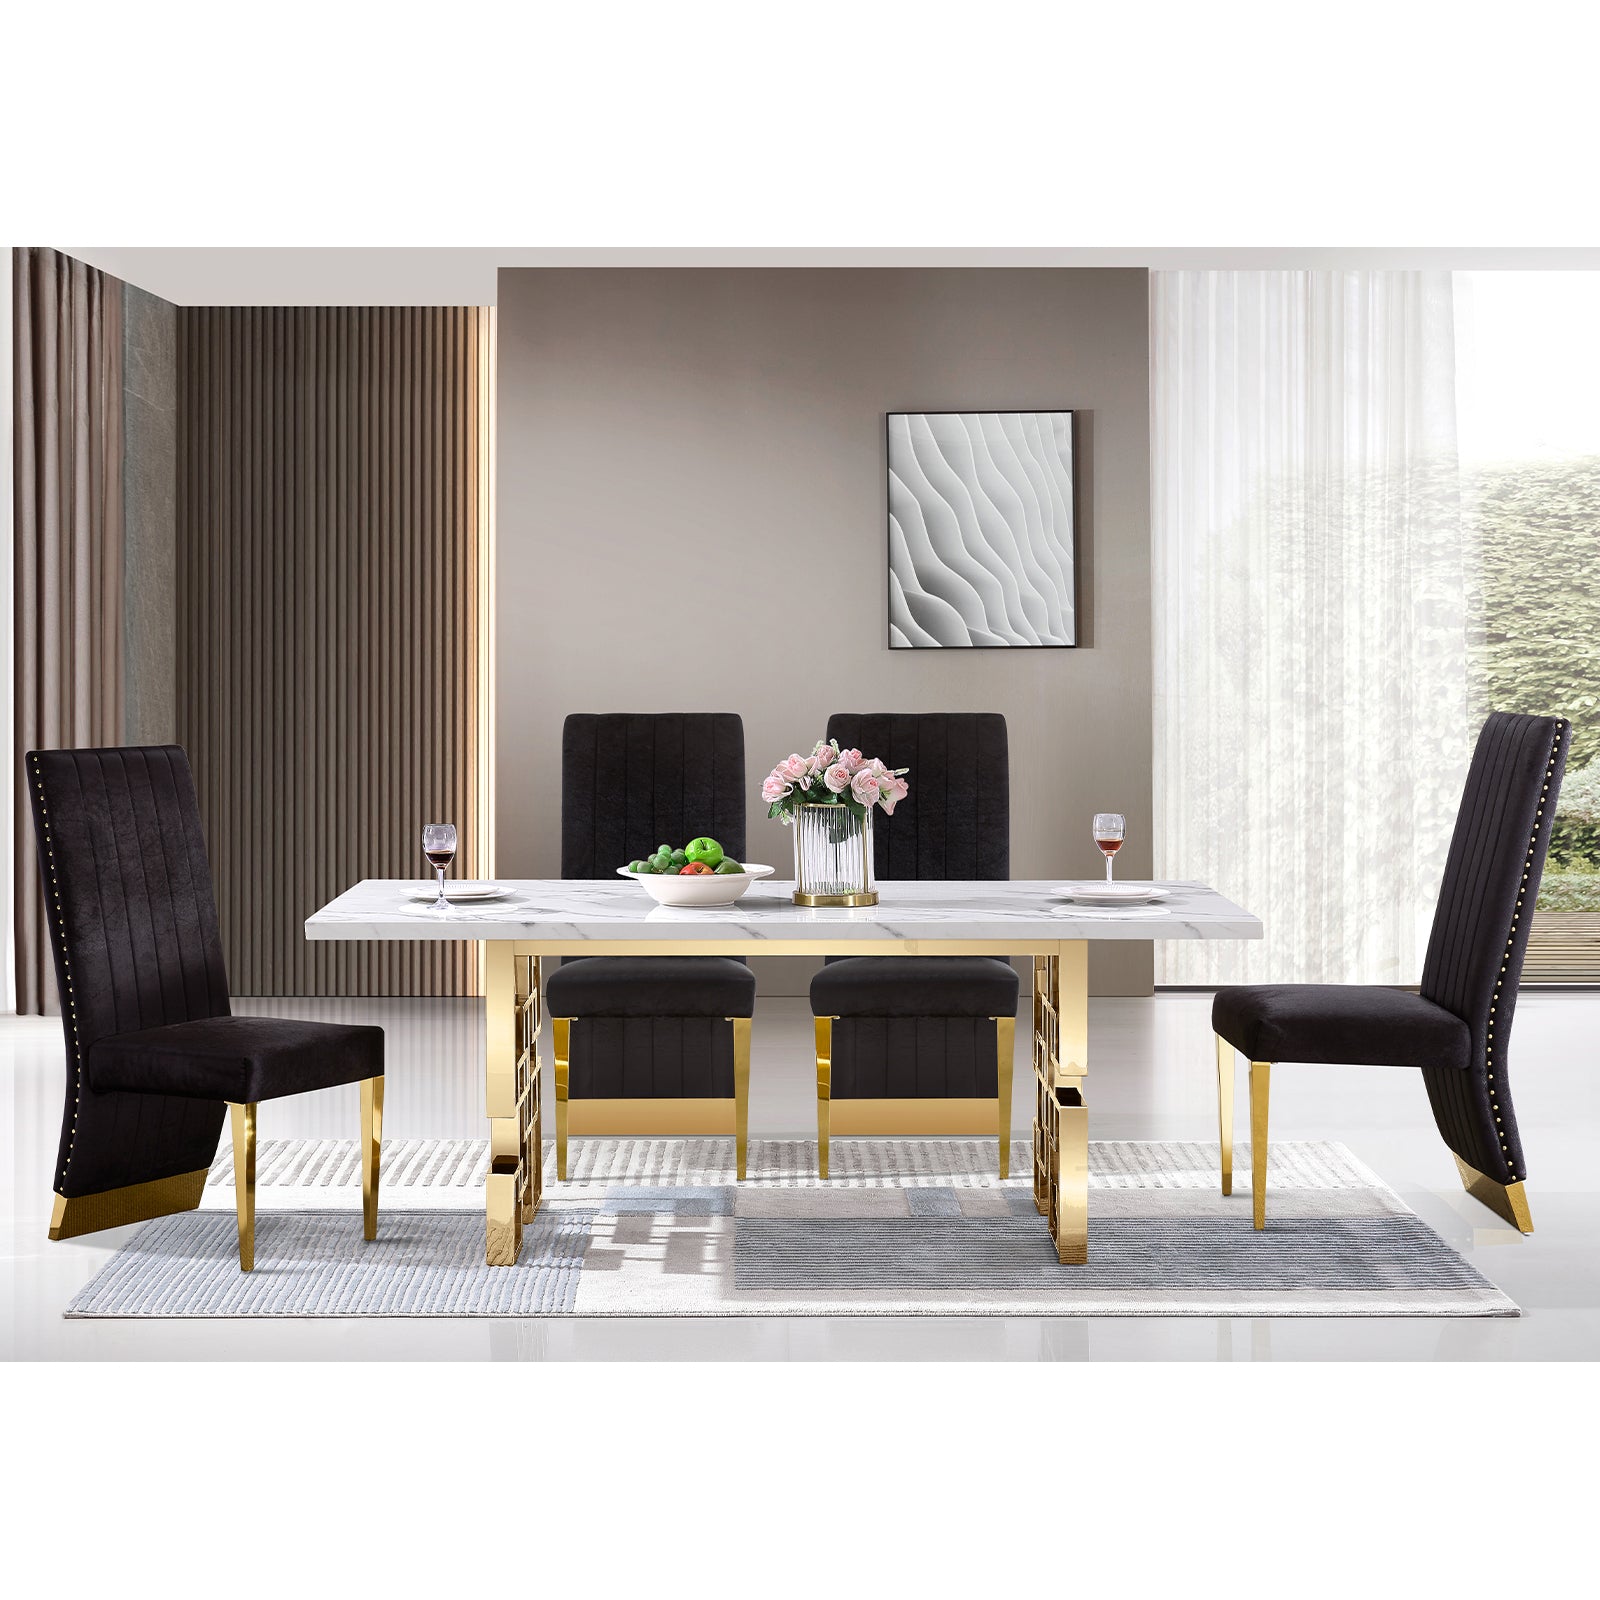 716 Set | AUZ Black and Gold Dining room Sets for 6